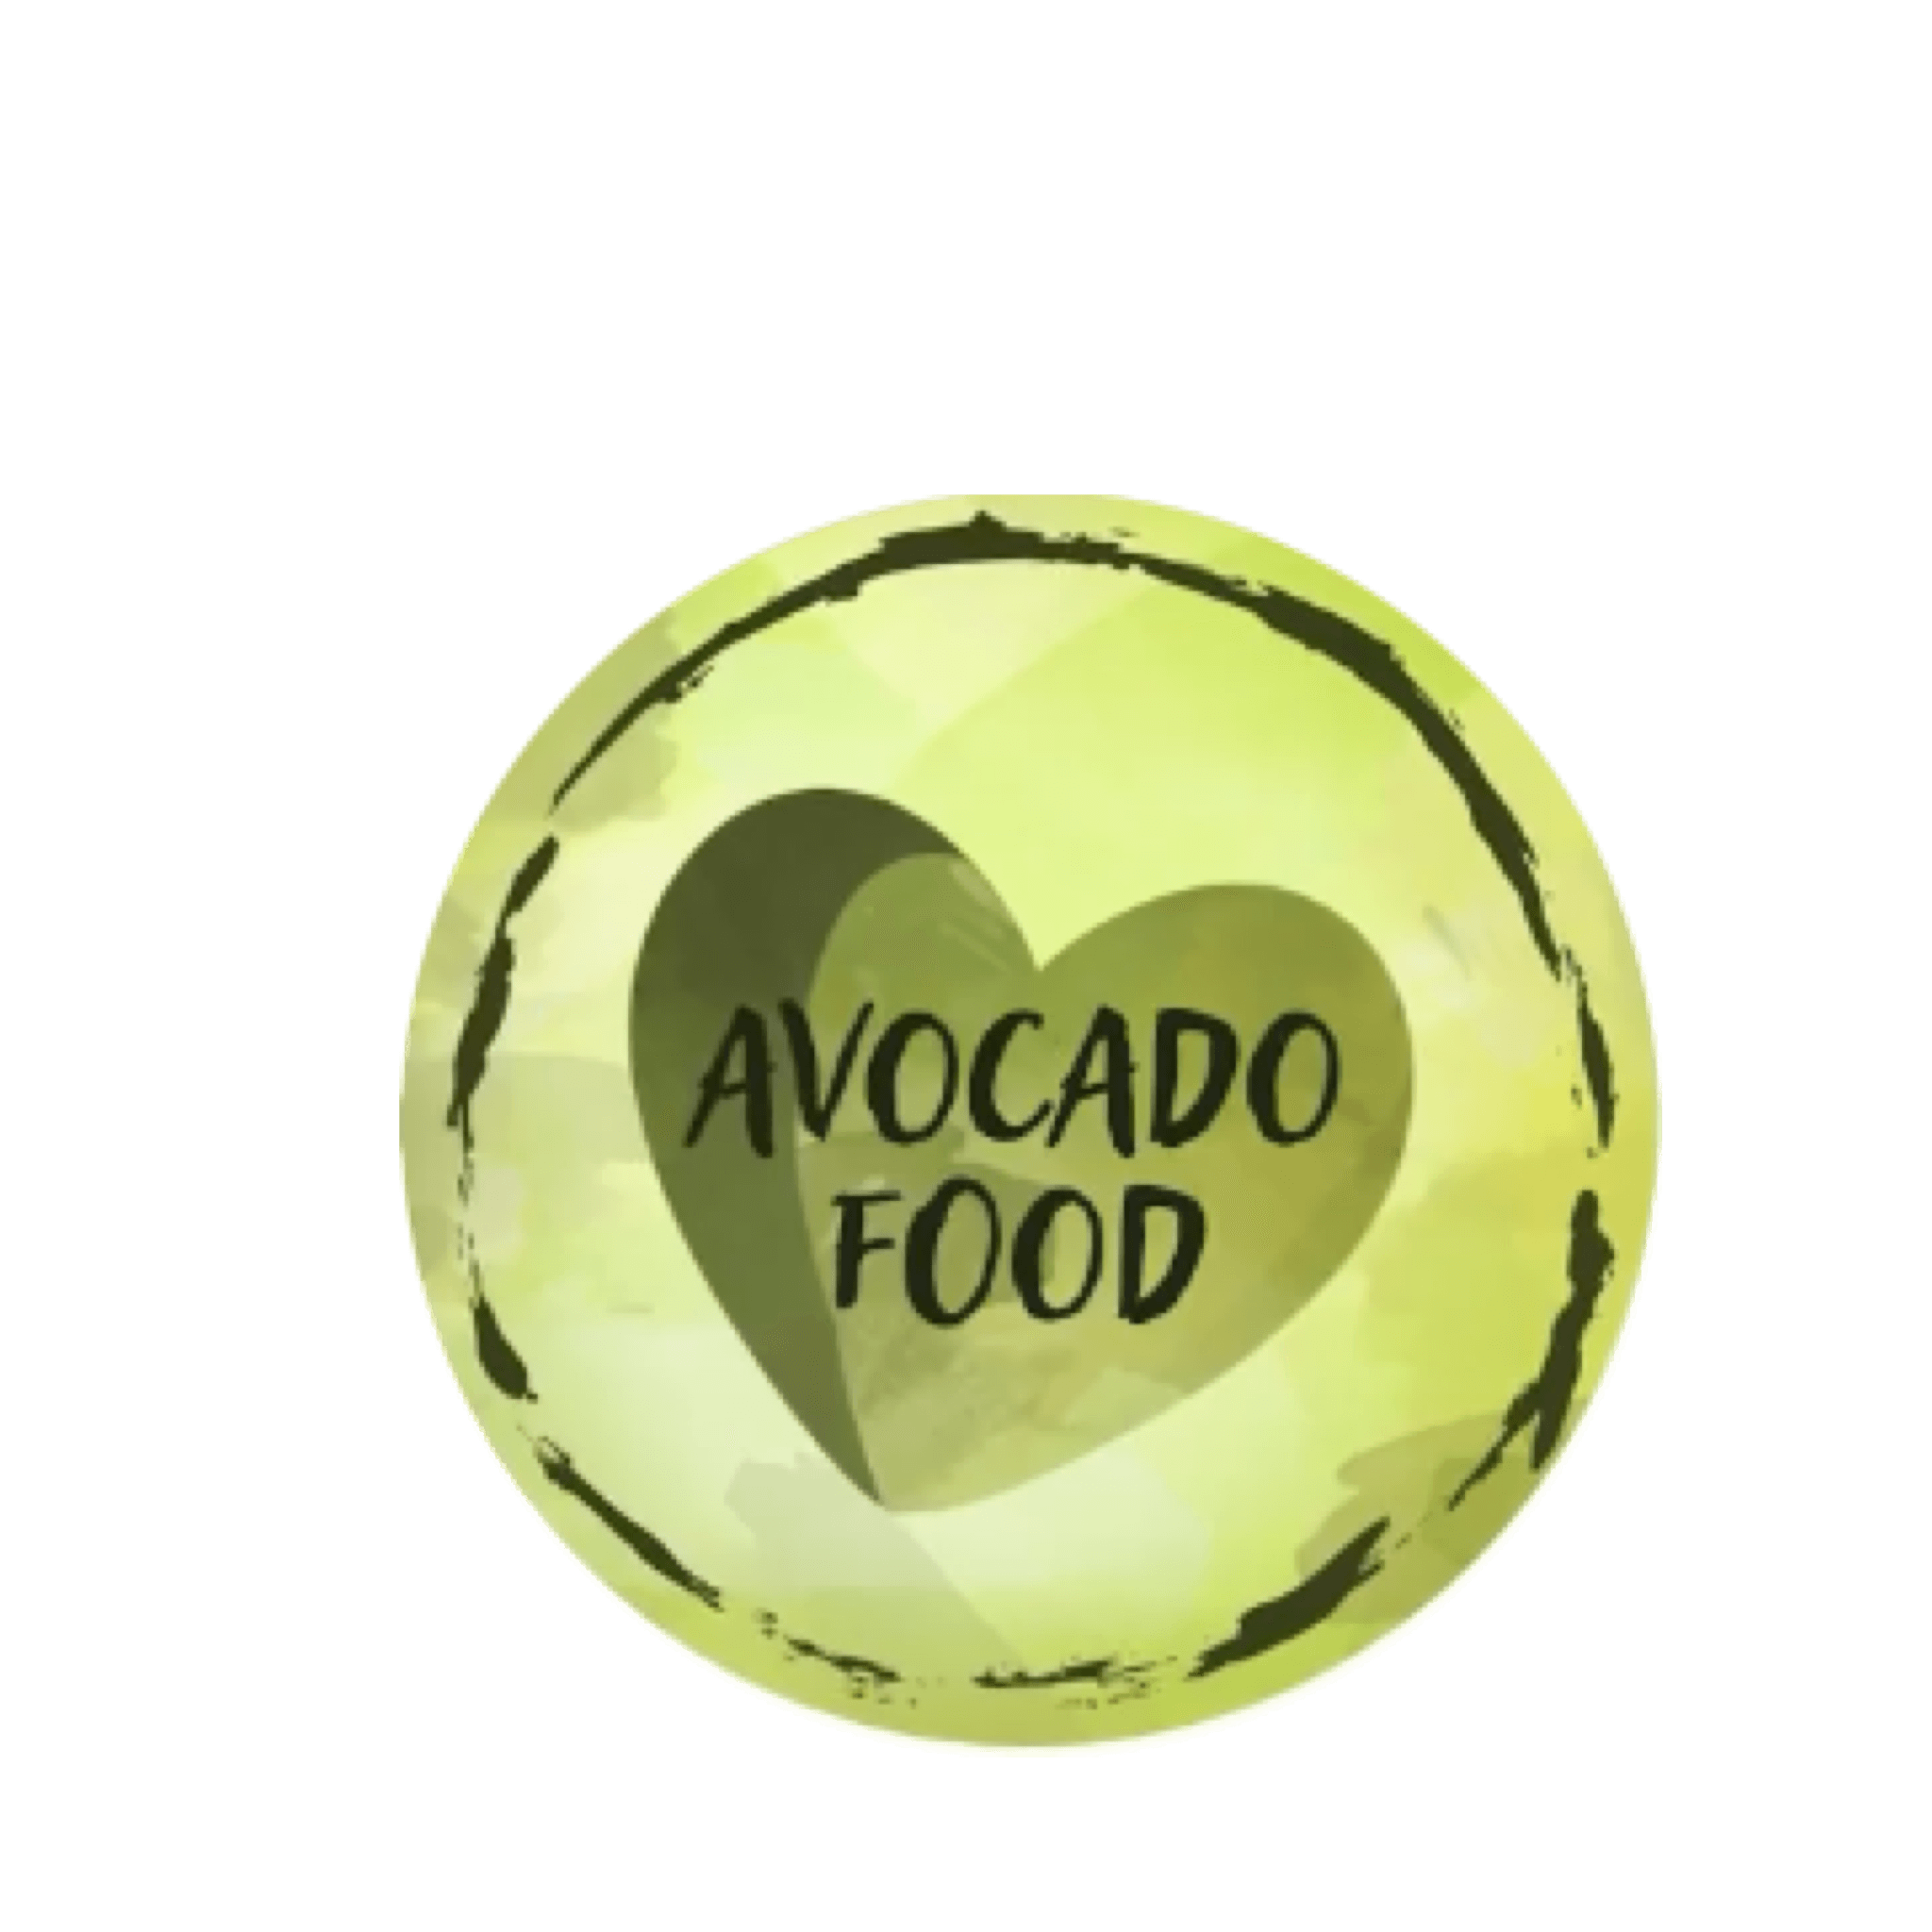 Avocado food